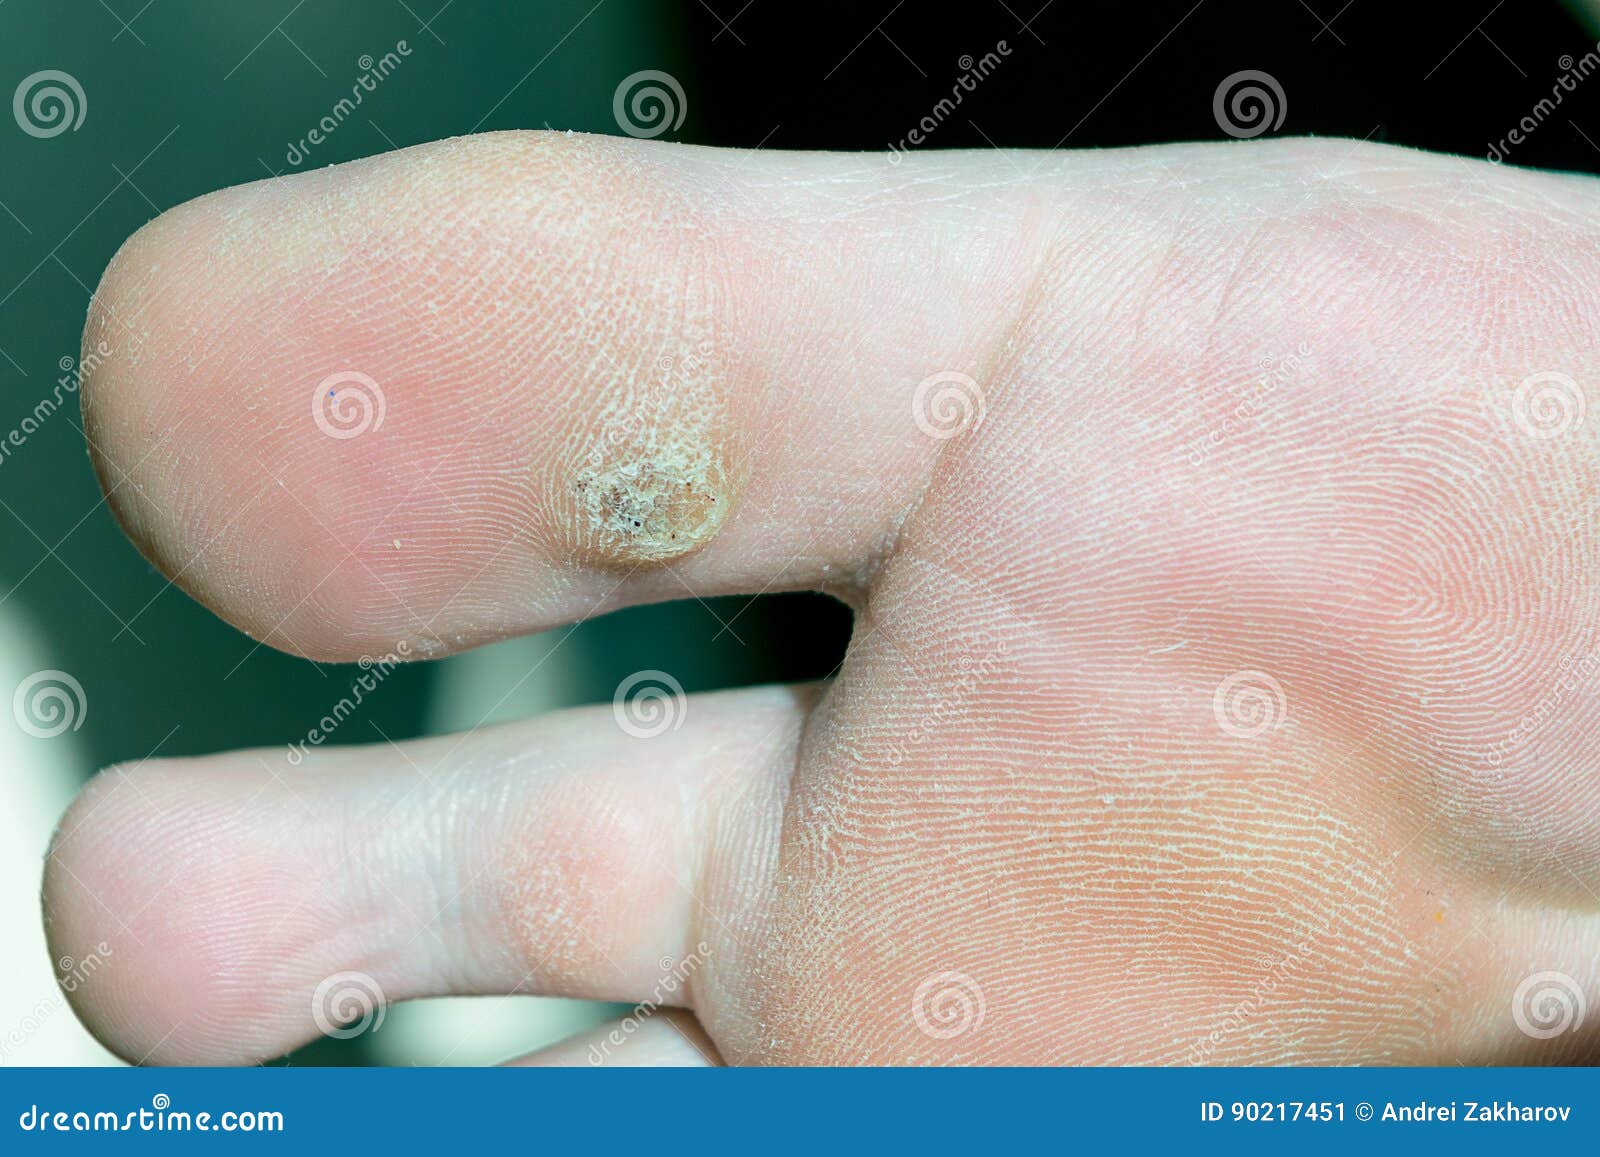 wart on foot black dots papilloma of conjunctiva